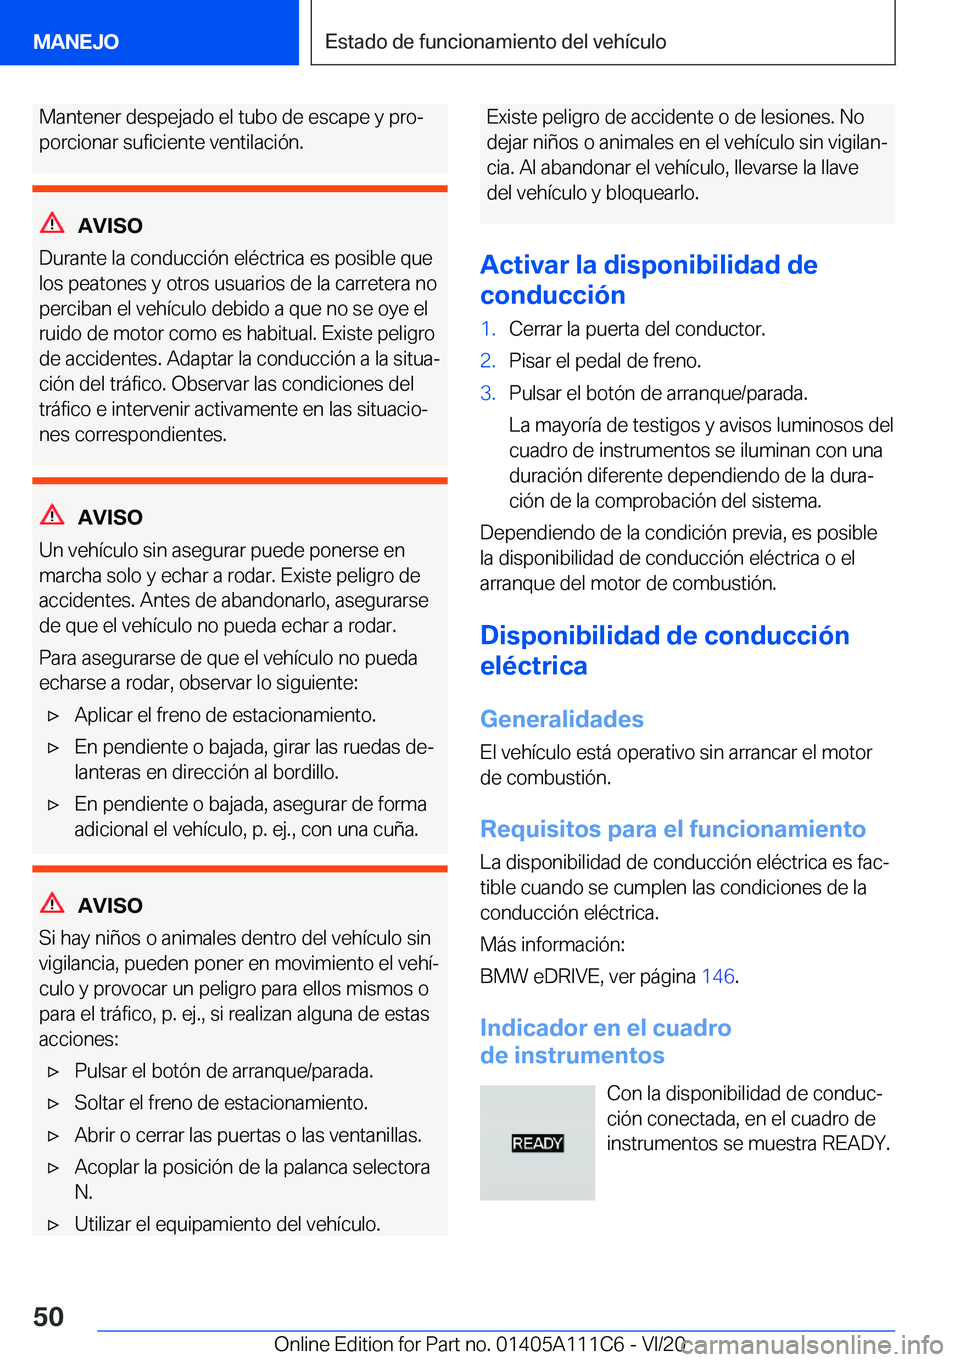 BMW 3 SERIES SEDAN PLUG-IN HYBRID 2021  Manuales de Empleo (in Spanish) �M�a�n�t�e�n�e�r��d�e�s�p�e�j�a�d�o��e�l��t�u�b�o��d�e��e�s�c�a�p�e��y��p�r�oª�p�o�r�c�i�o�n�a�r��s�u�f�i�c�i�e�n�t�e��v�e�n�t�i�l�a�c�i�